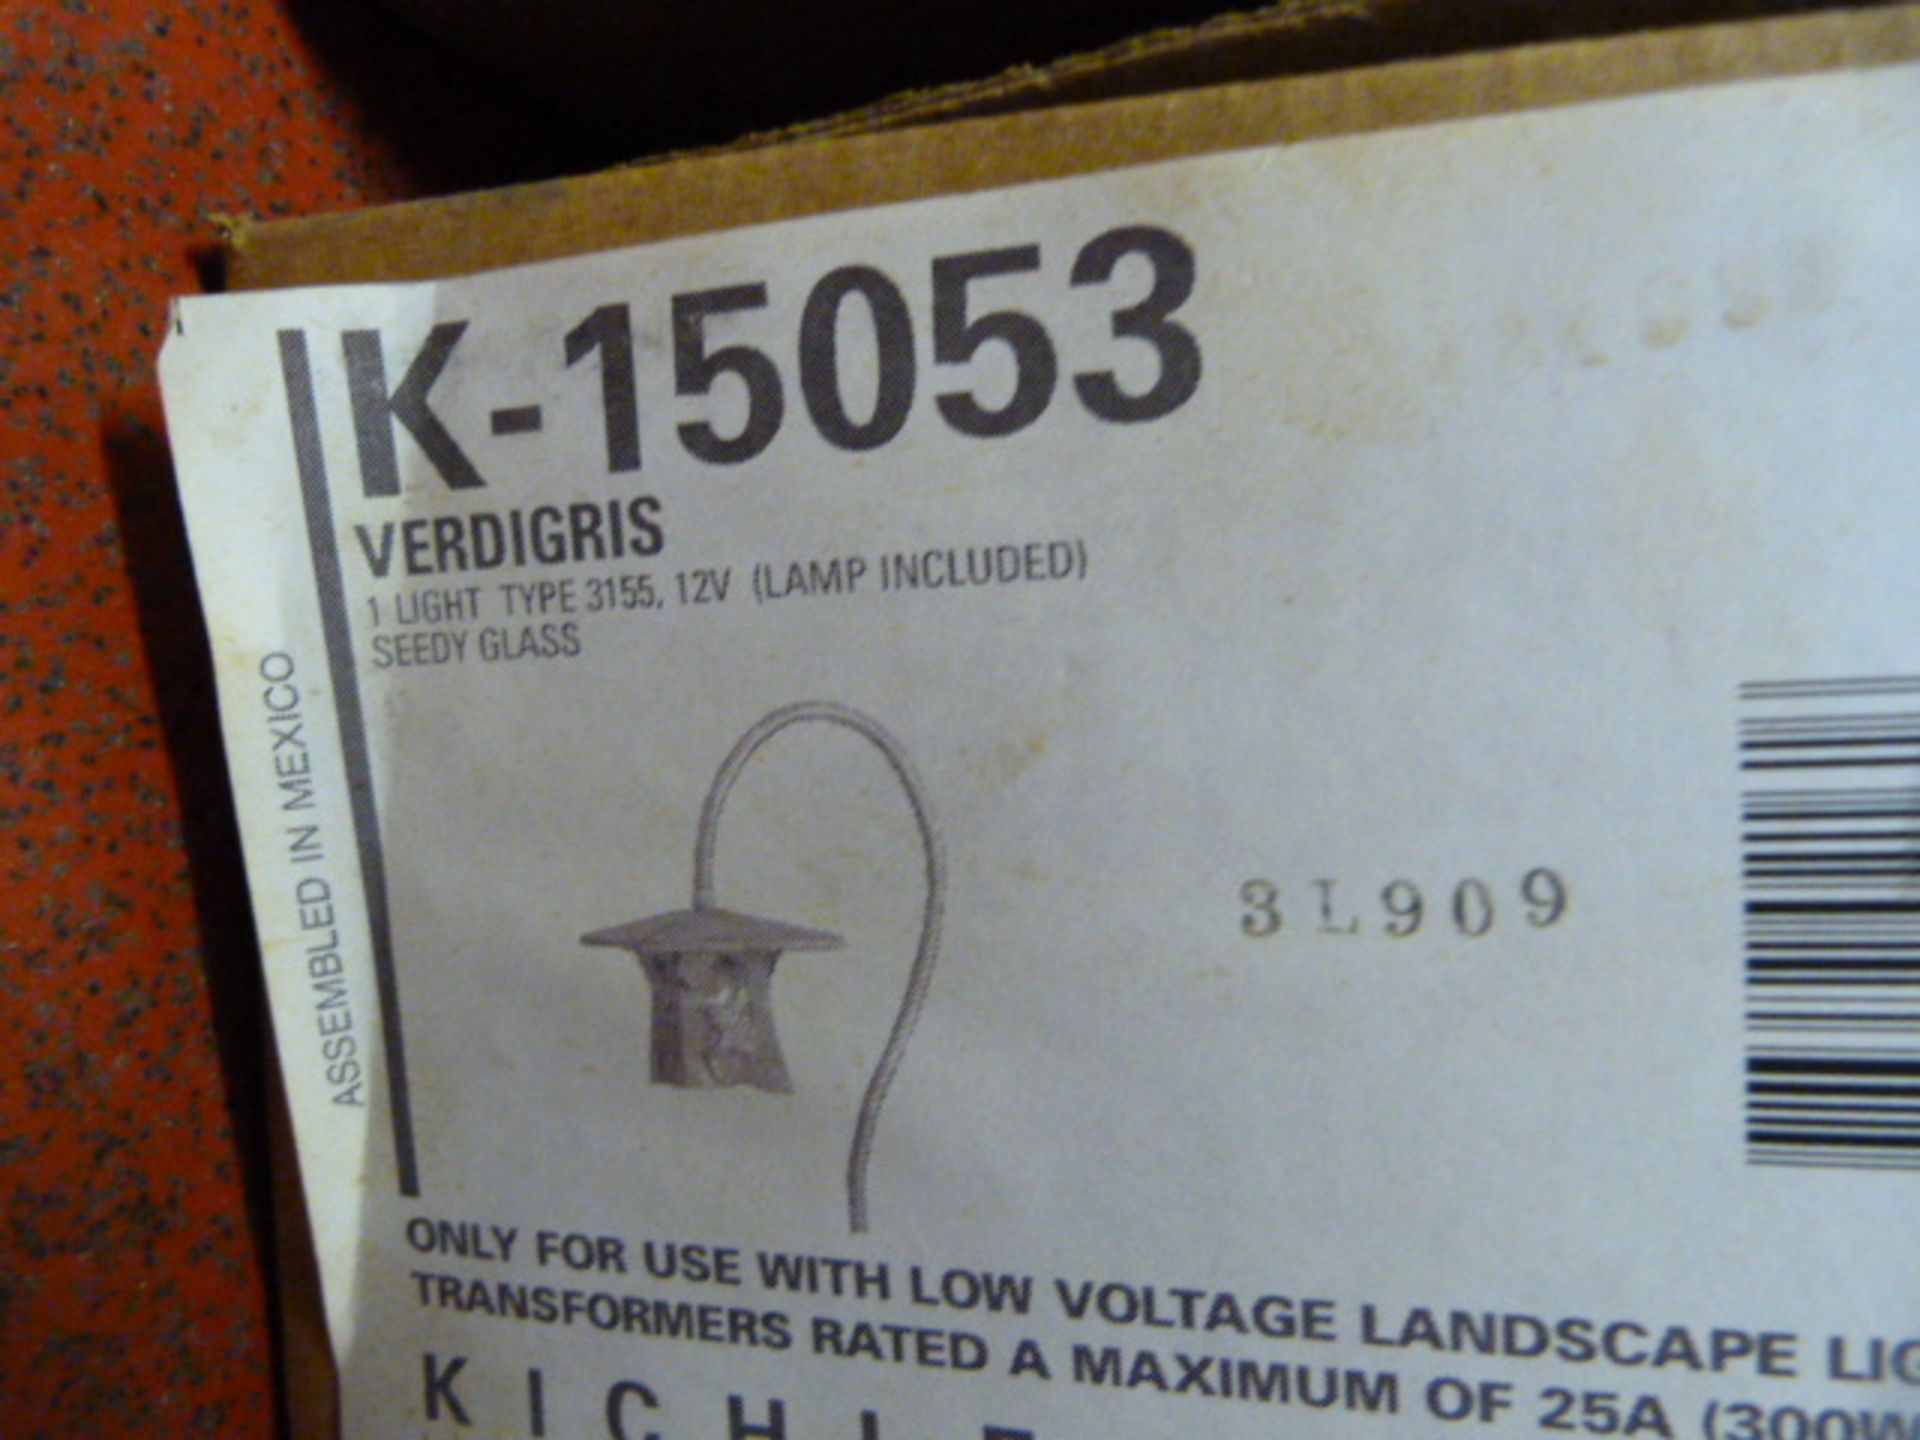 *K-15053 Verdigris Light Fitting with Seedy Glass